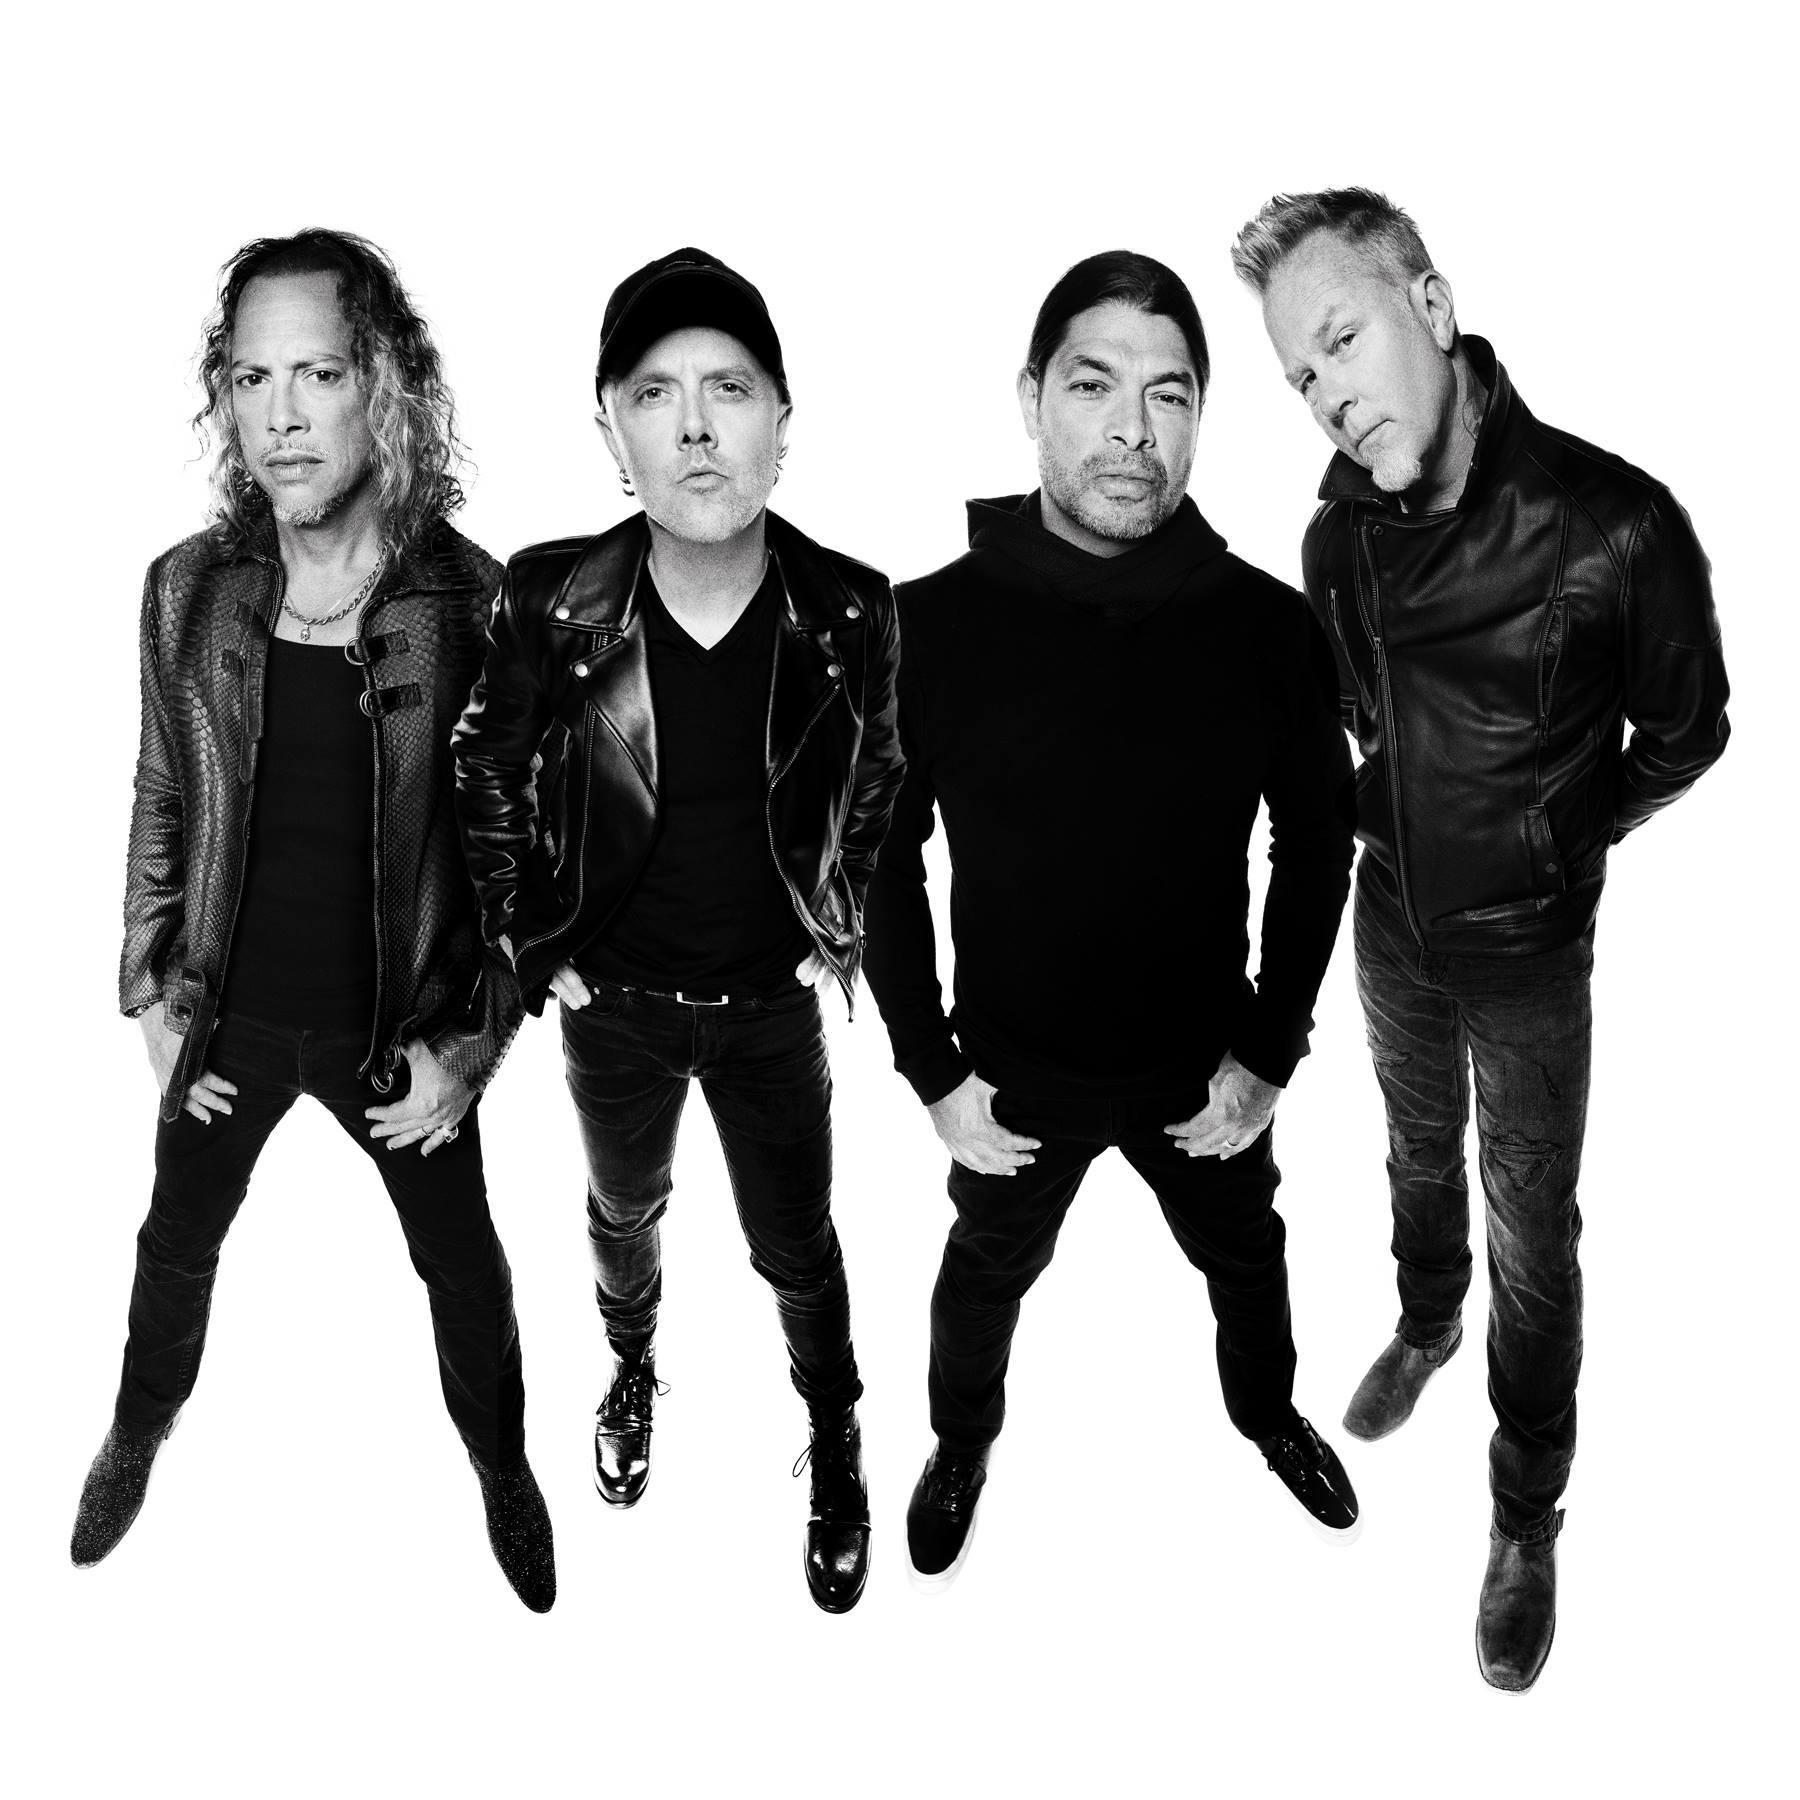 Metallica Tickets